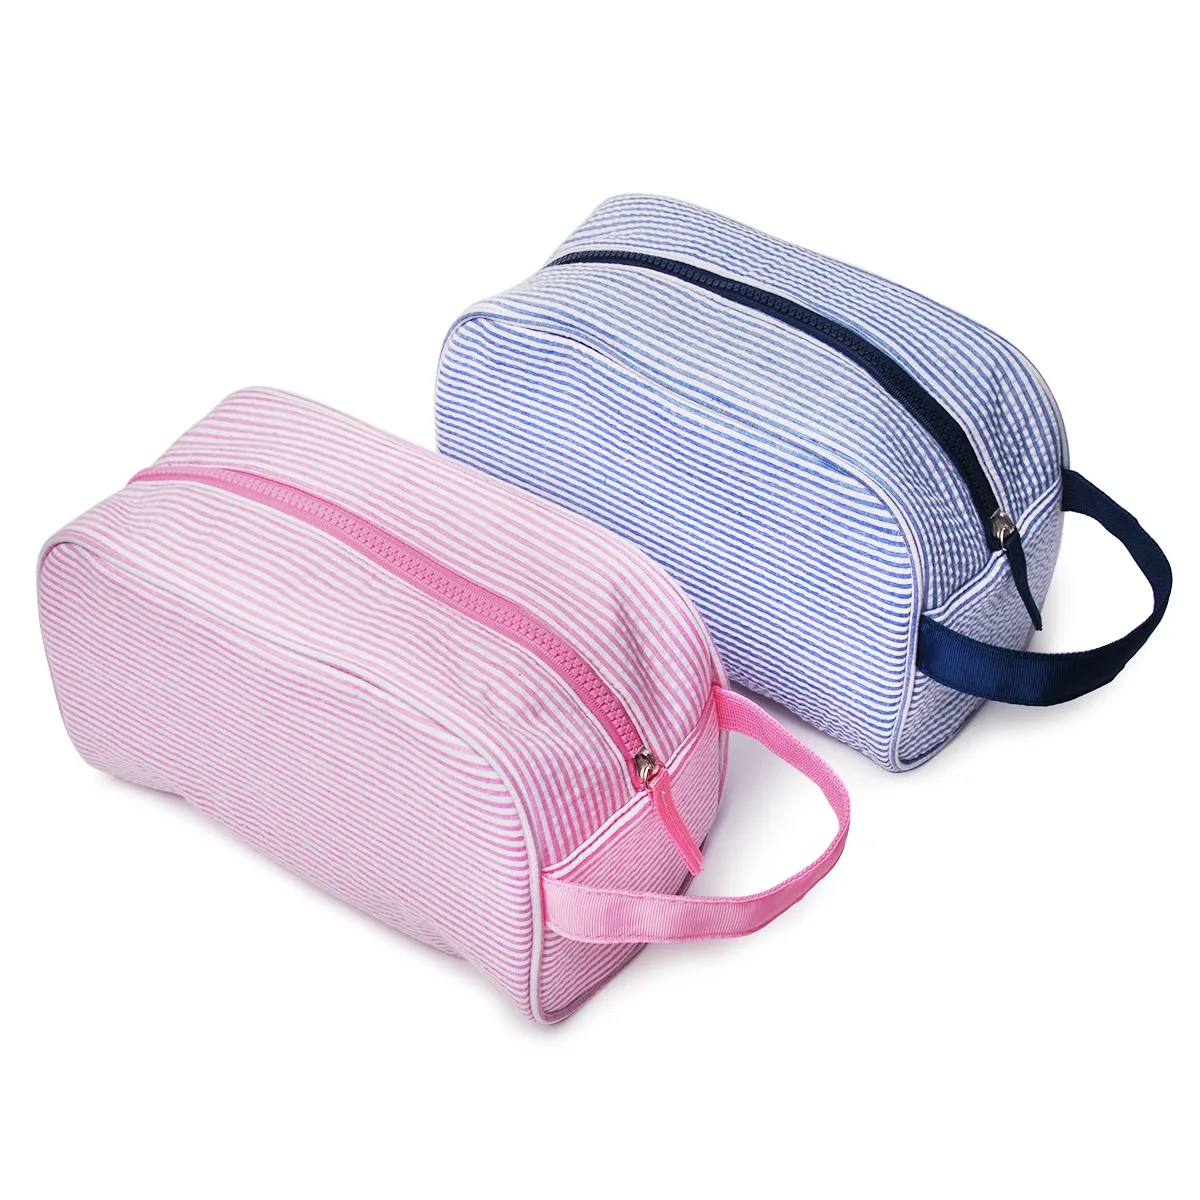 

DOMIL Wholesale Seersucker Cosmetic Bag Fashion Seersucker Makeup Pouch with Zipper Closure for Women DOM112-1518, Pink navy blue